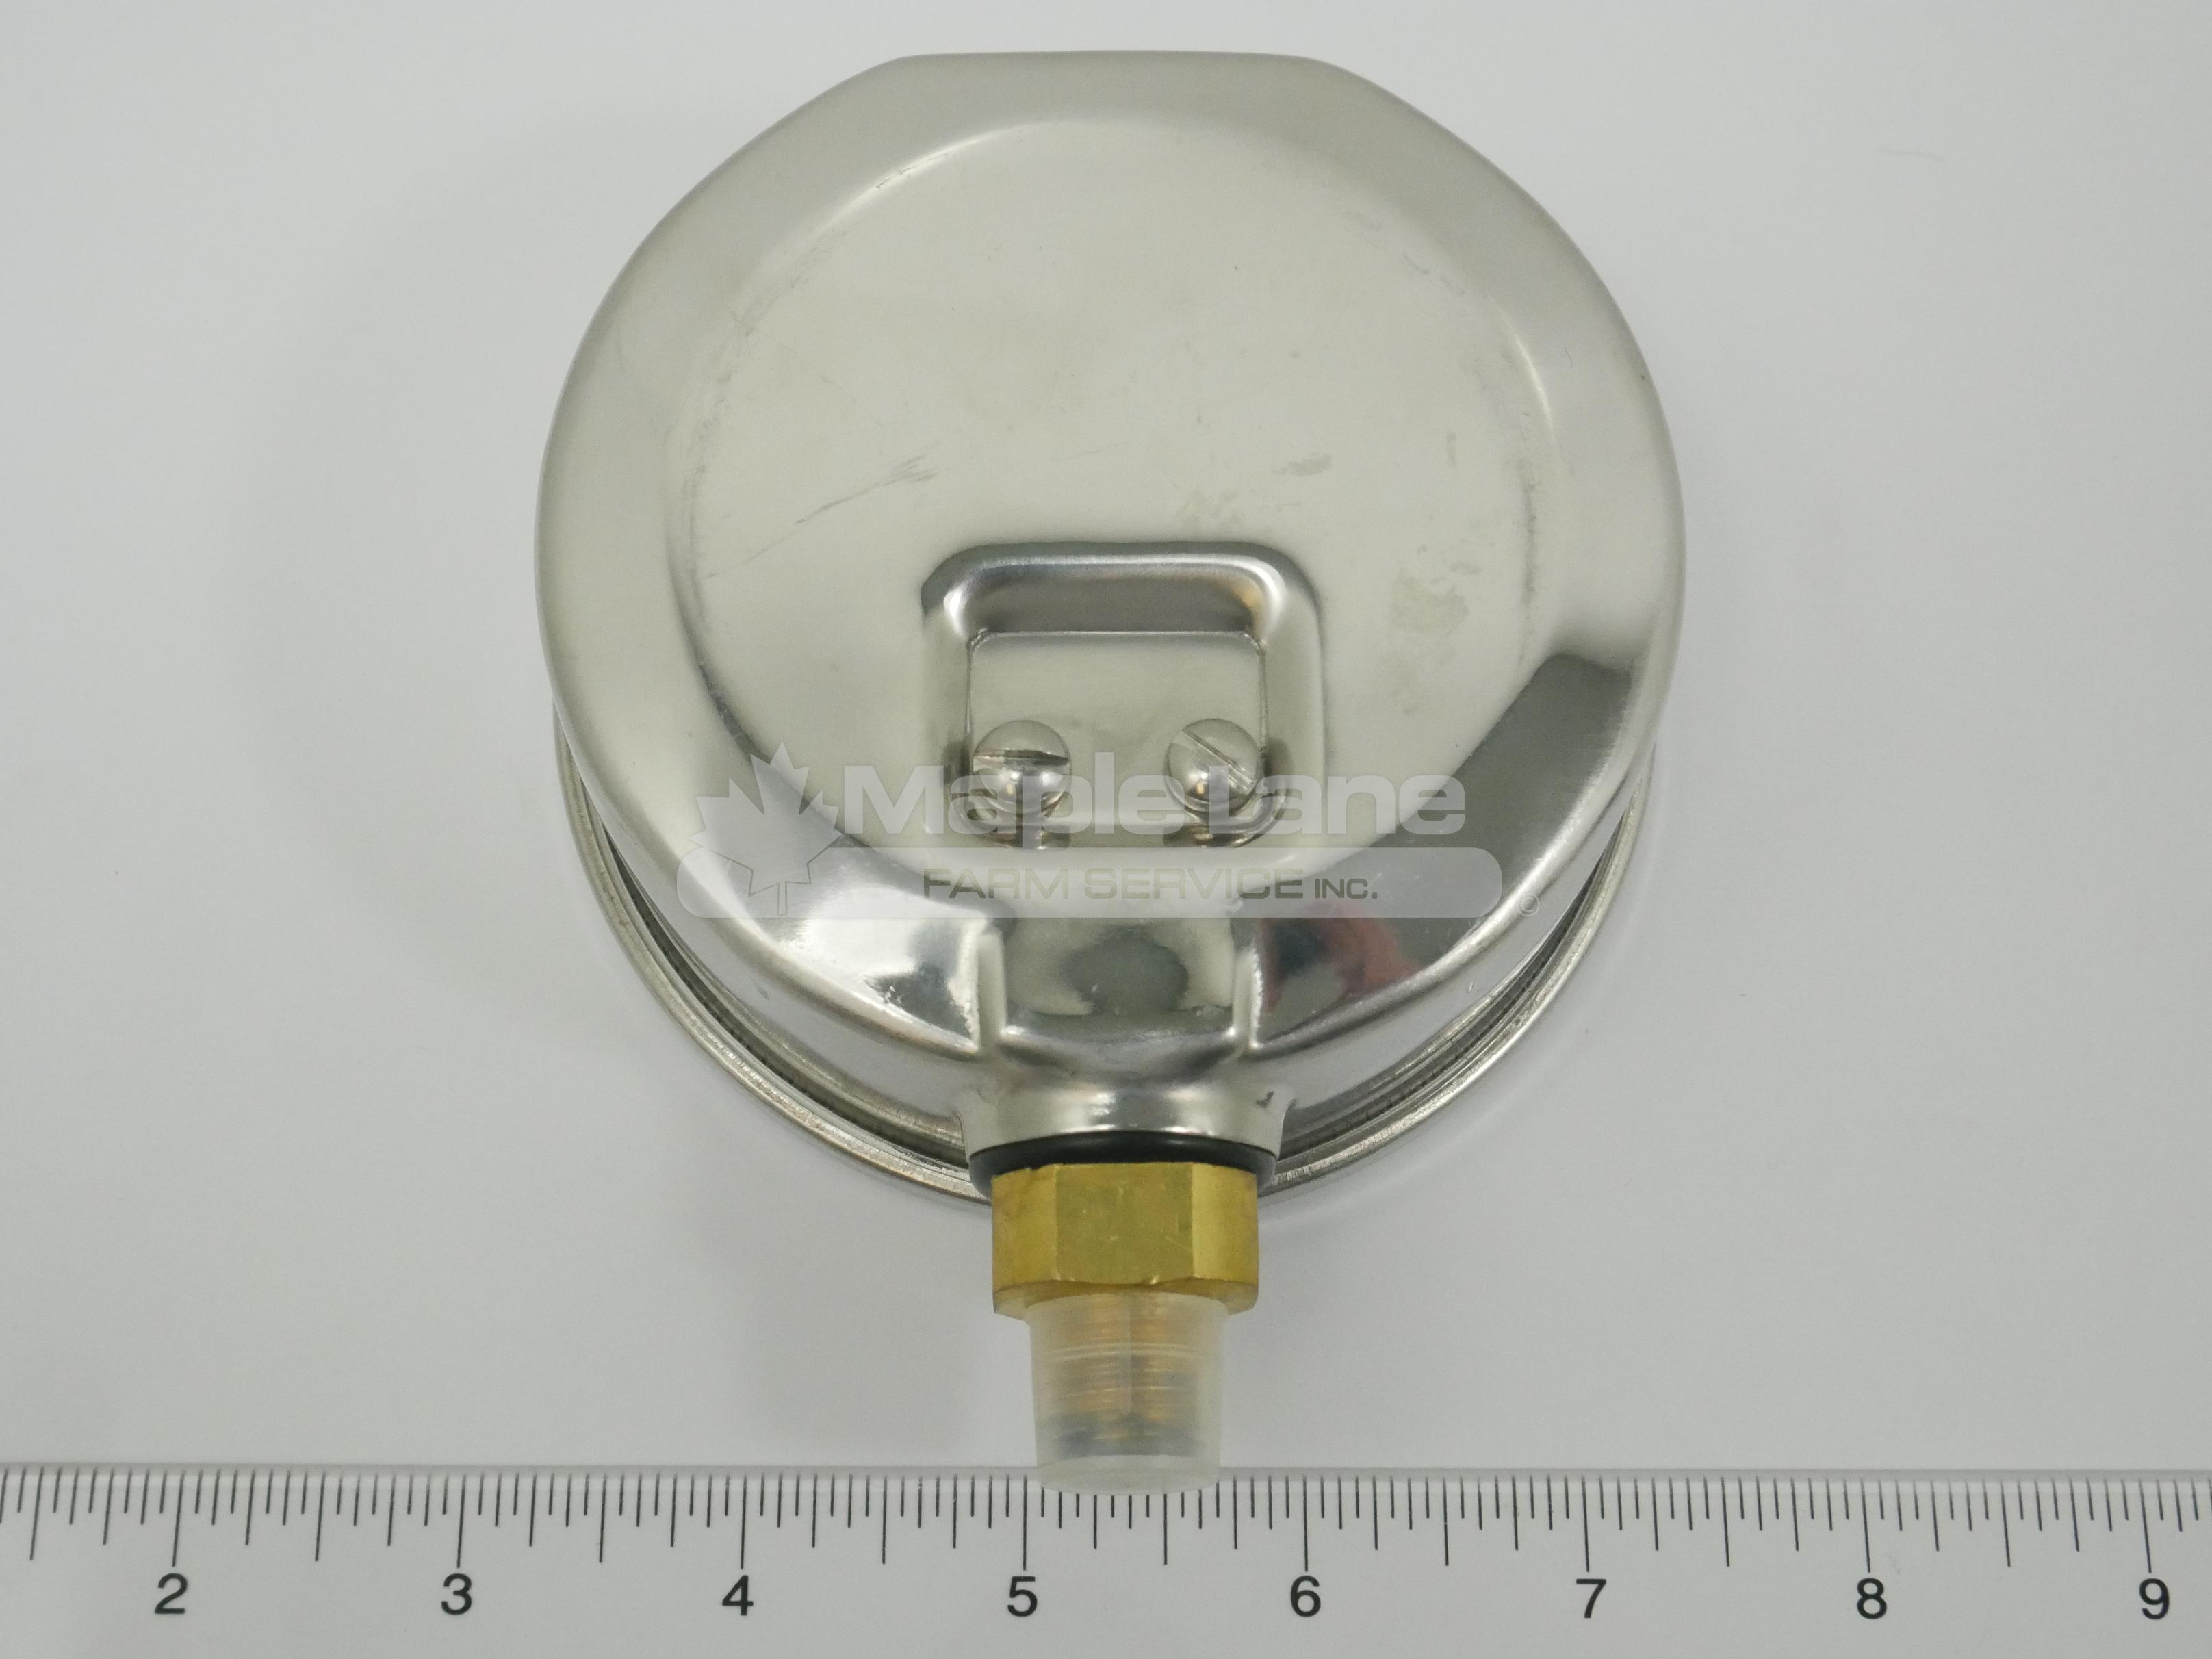 SPPG-17-400 1/4" Pressure Gauge SS